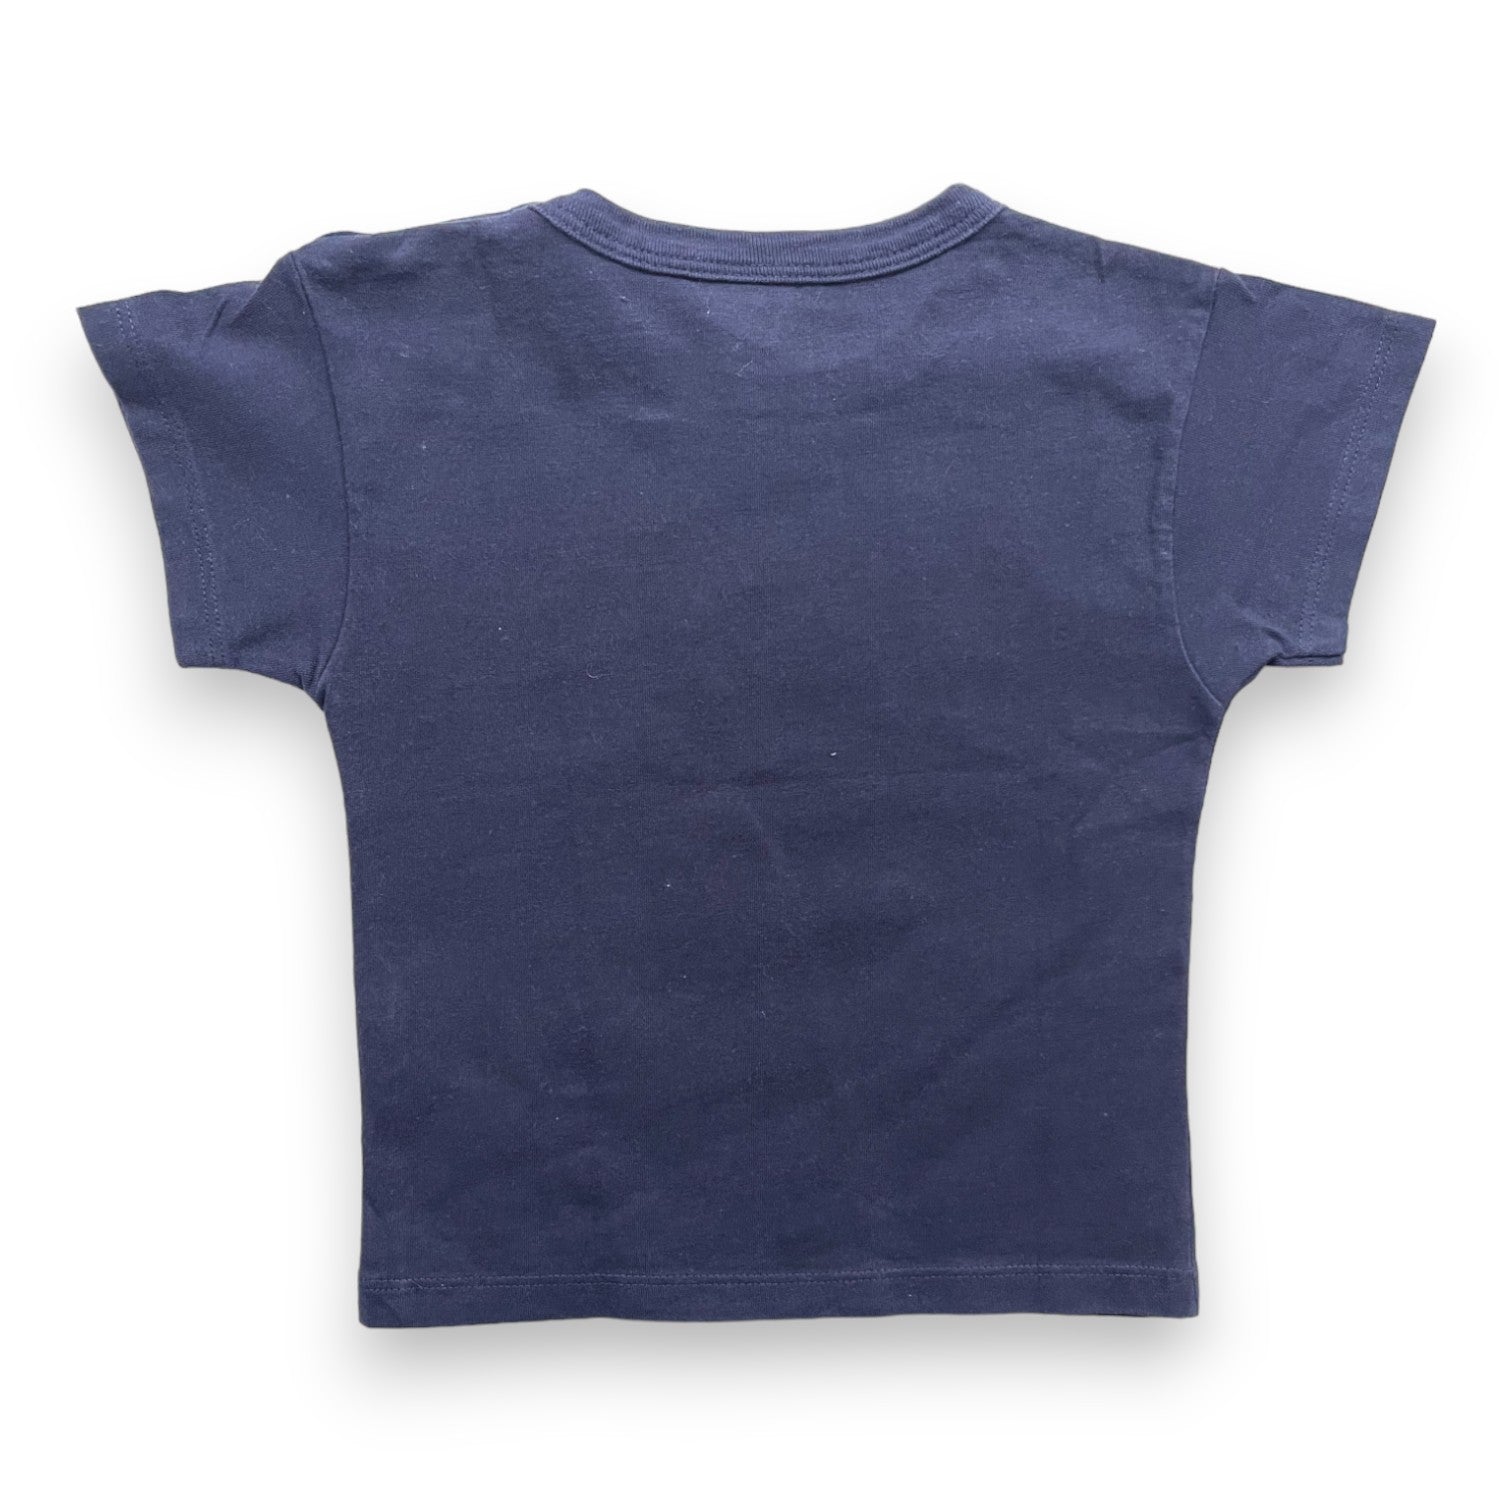 PETIT BATEAU - T shirt bleu marine paquebot - 2 ans